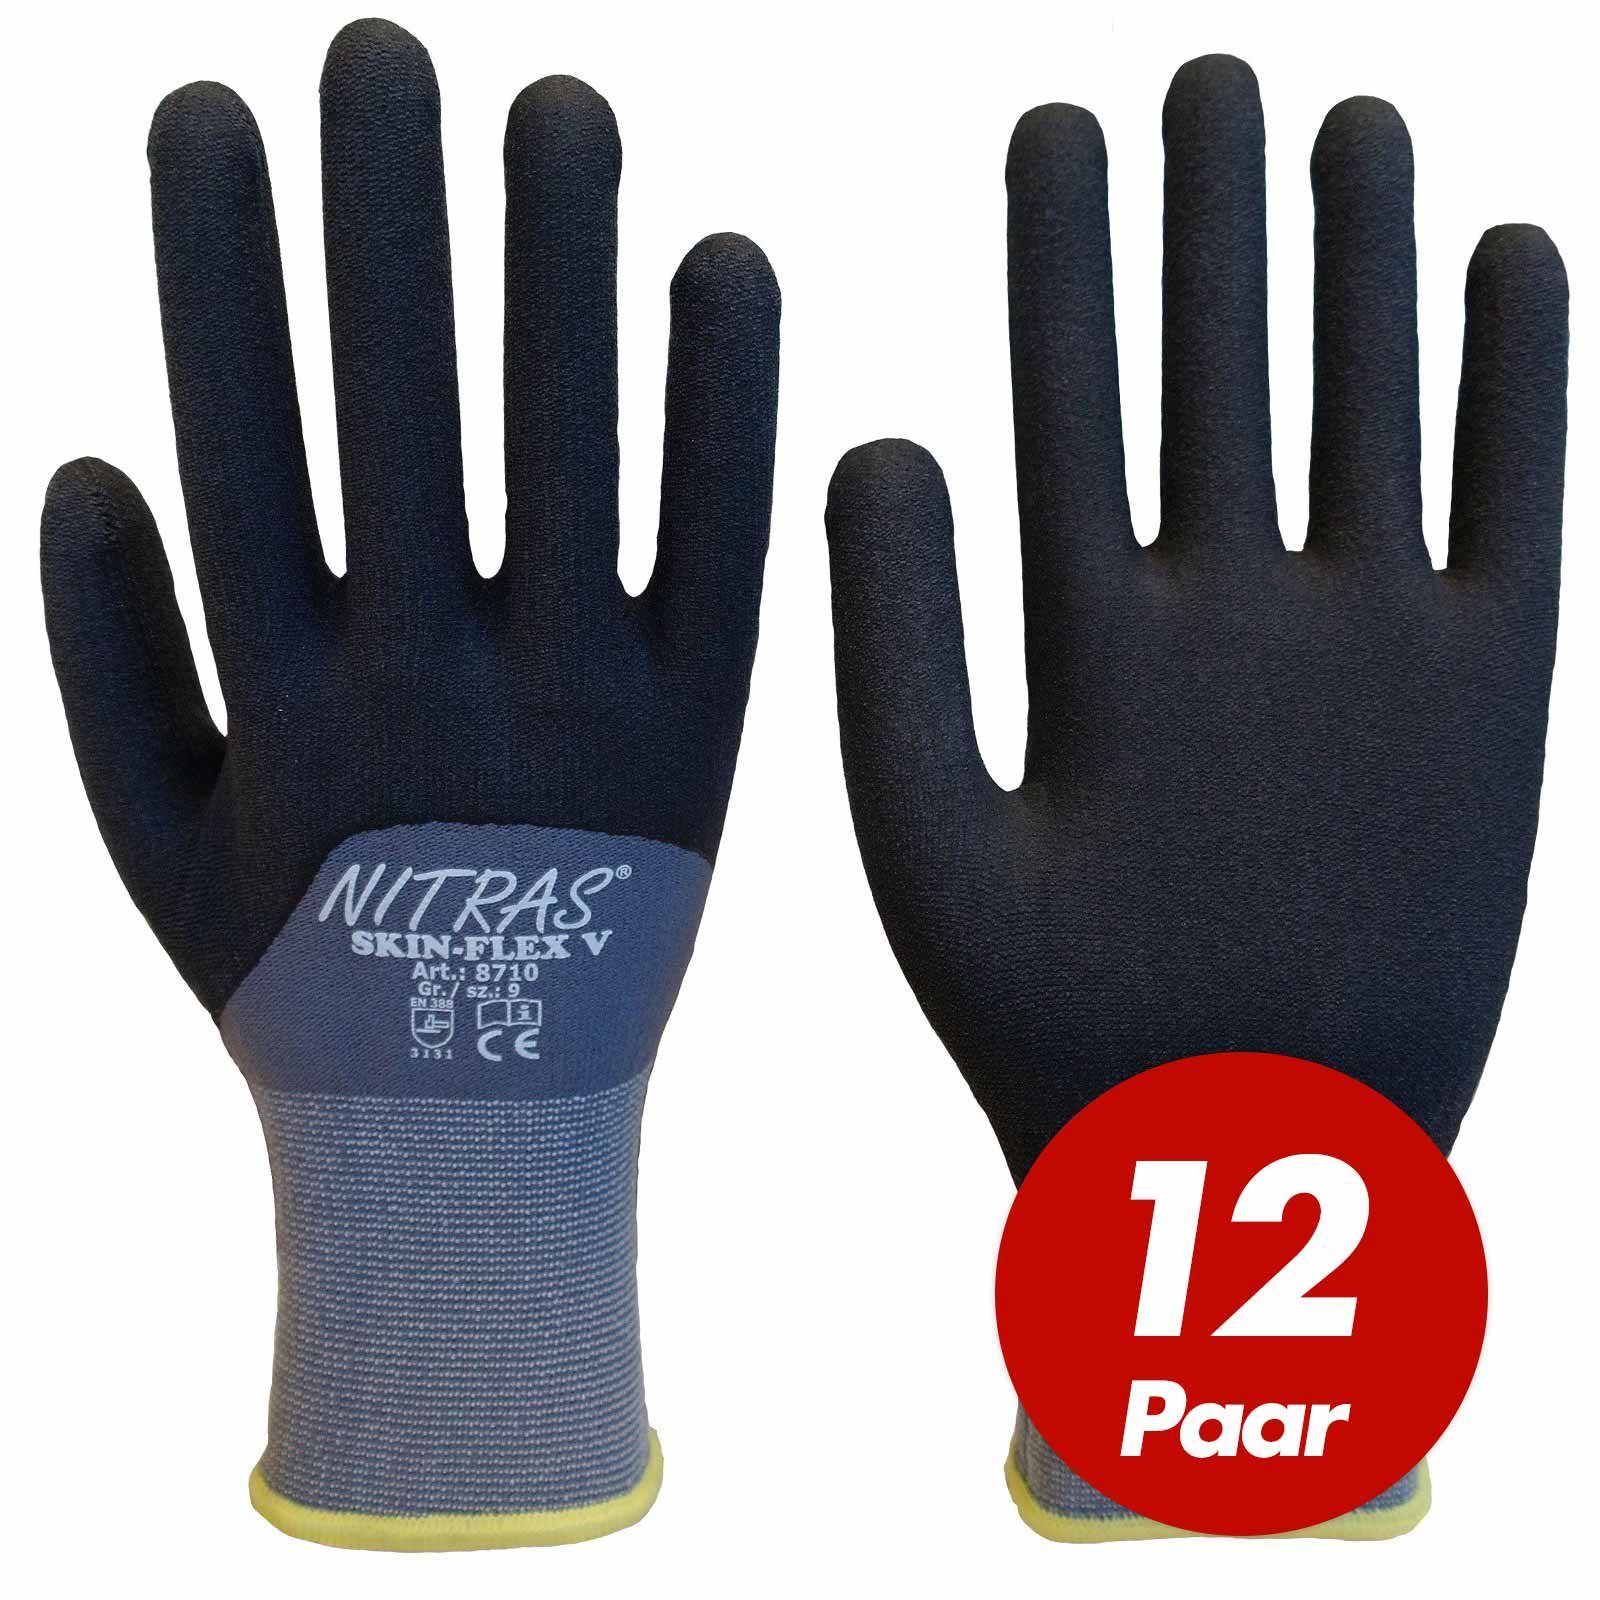 Nitras Nitril-Handschuhe NITRAS 8710 Skin-Flex V Strickhandschuh 3/4 Spezalbeschichtung-12 Paar (Spar-Set)